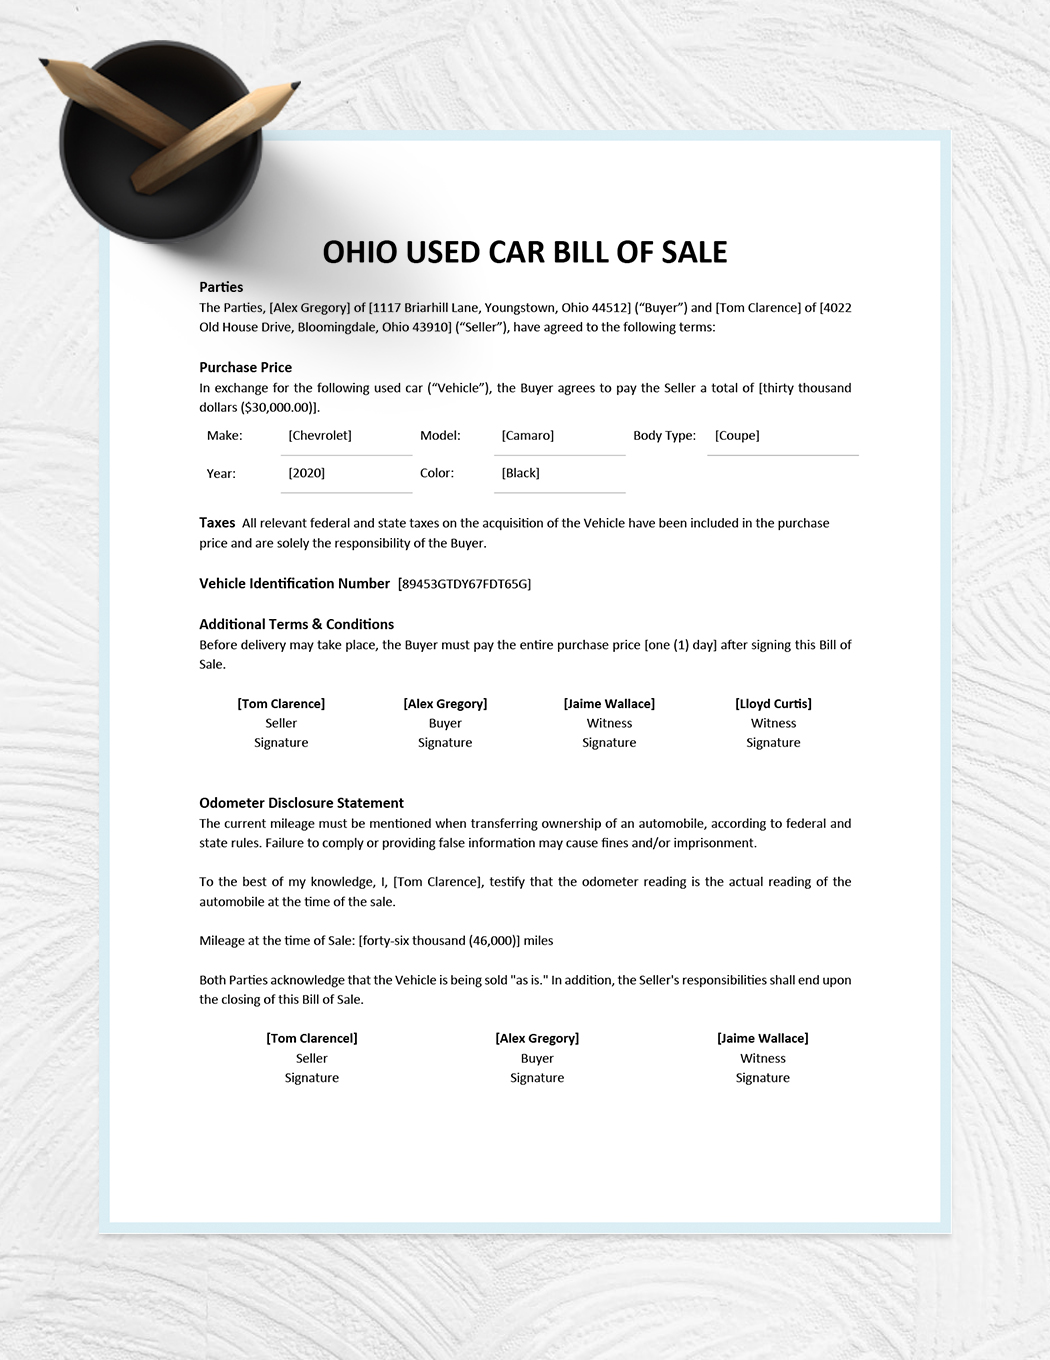 Ohio Used Car Bill of Sale Template